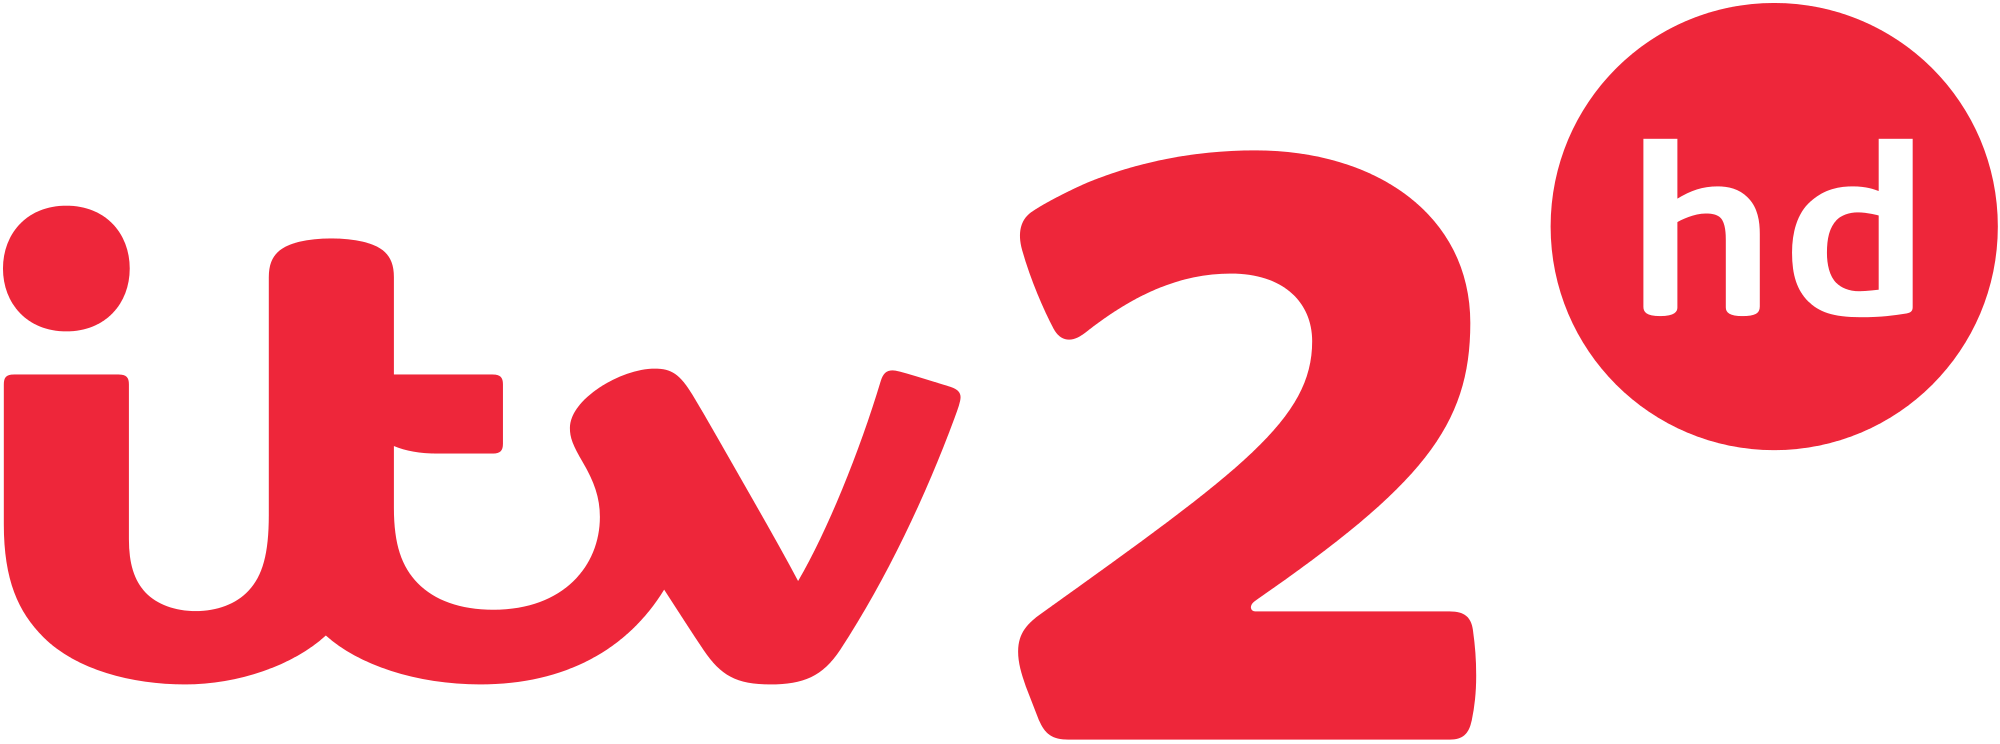 Itv2 Hd Logo PNG - 112433